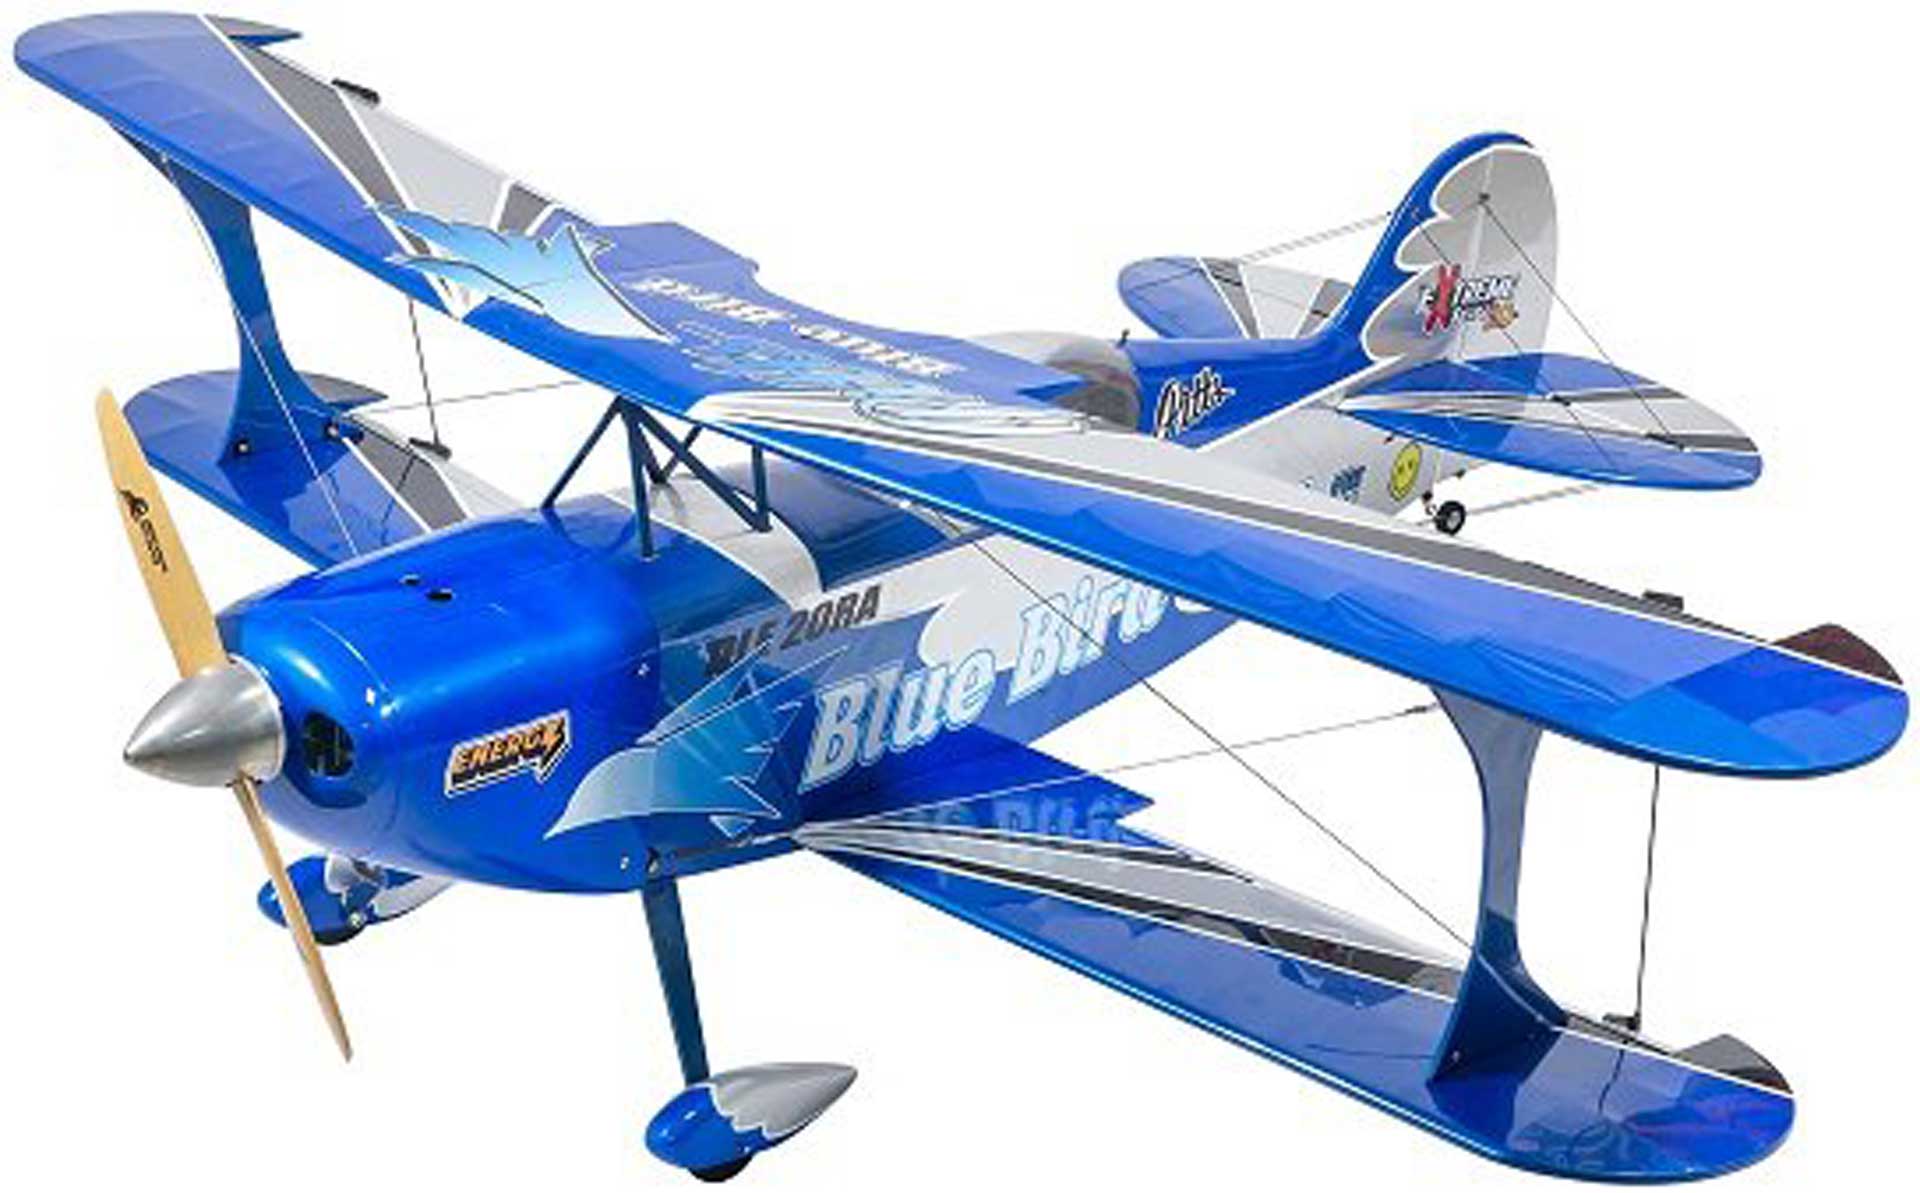 PICHLER Pitts S1 (blue) / 1520 mm ARF Biplane